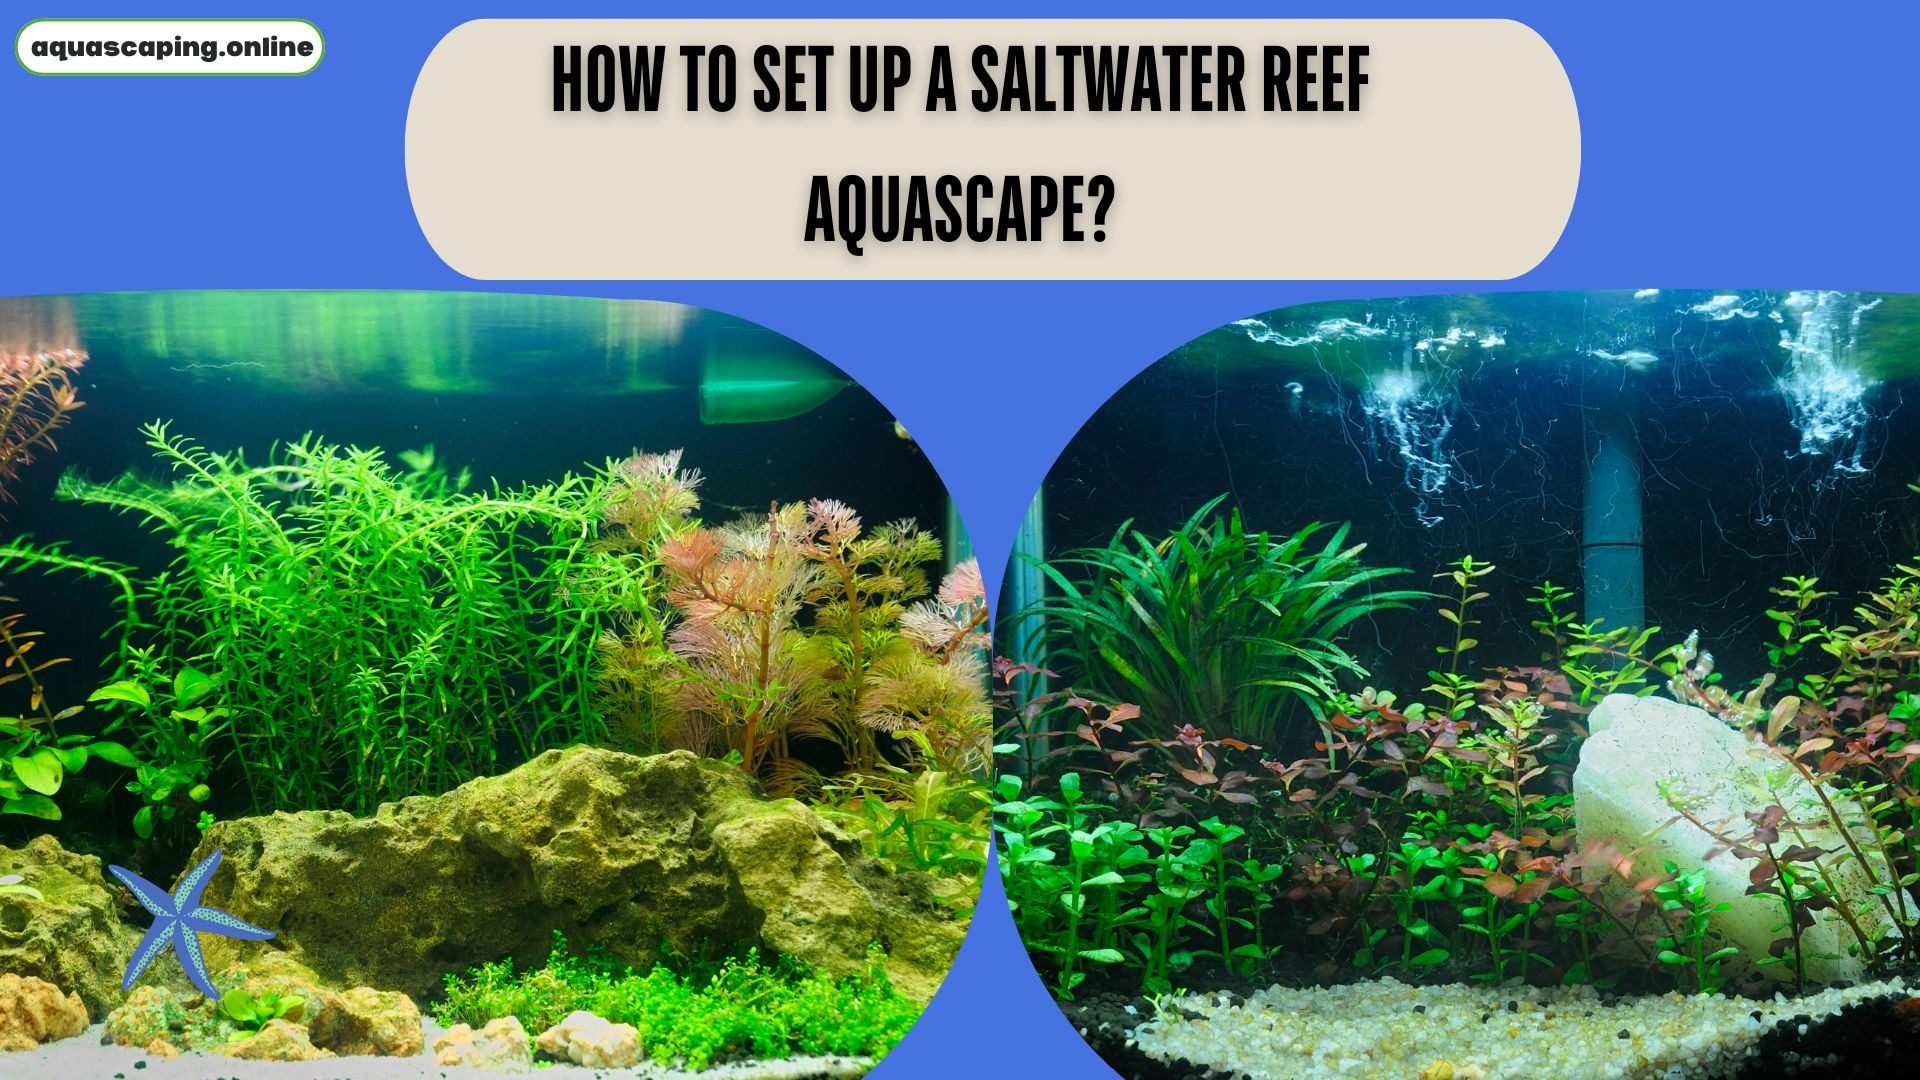 Set up a saltwater reef aquascape